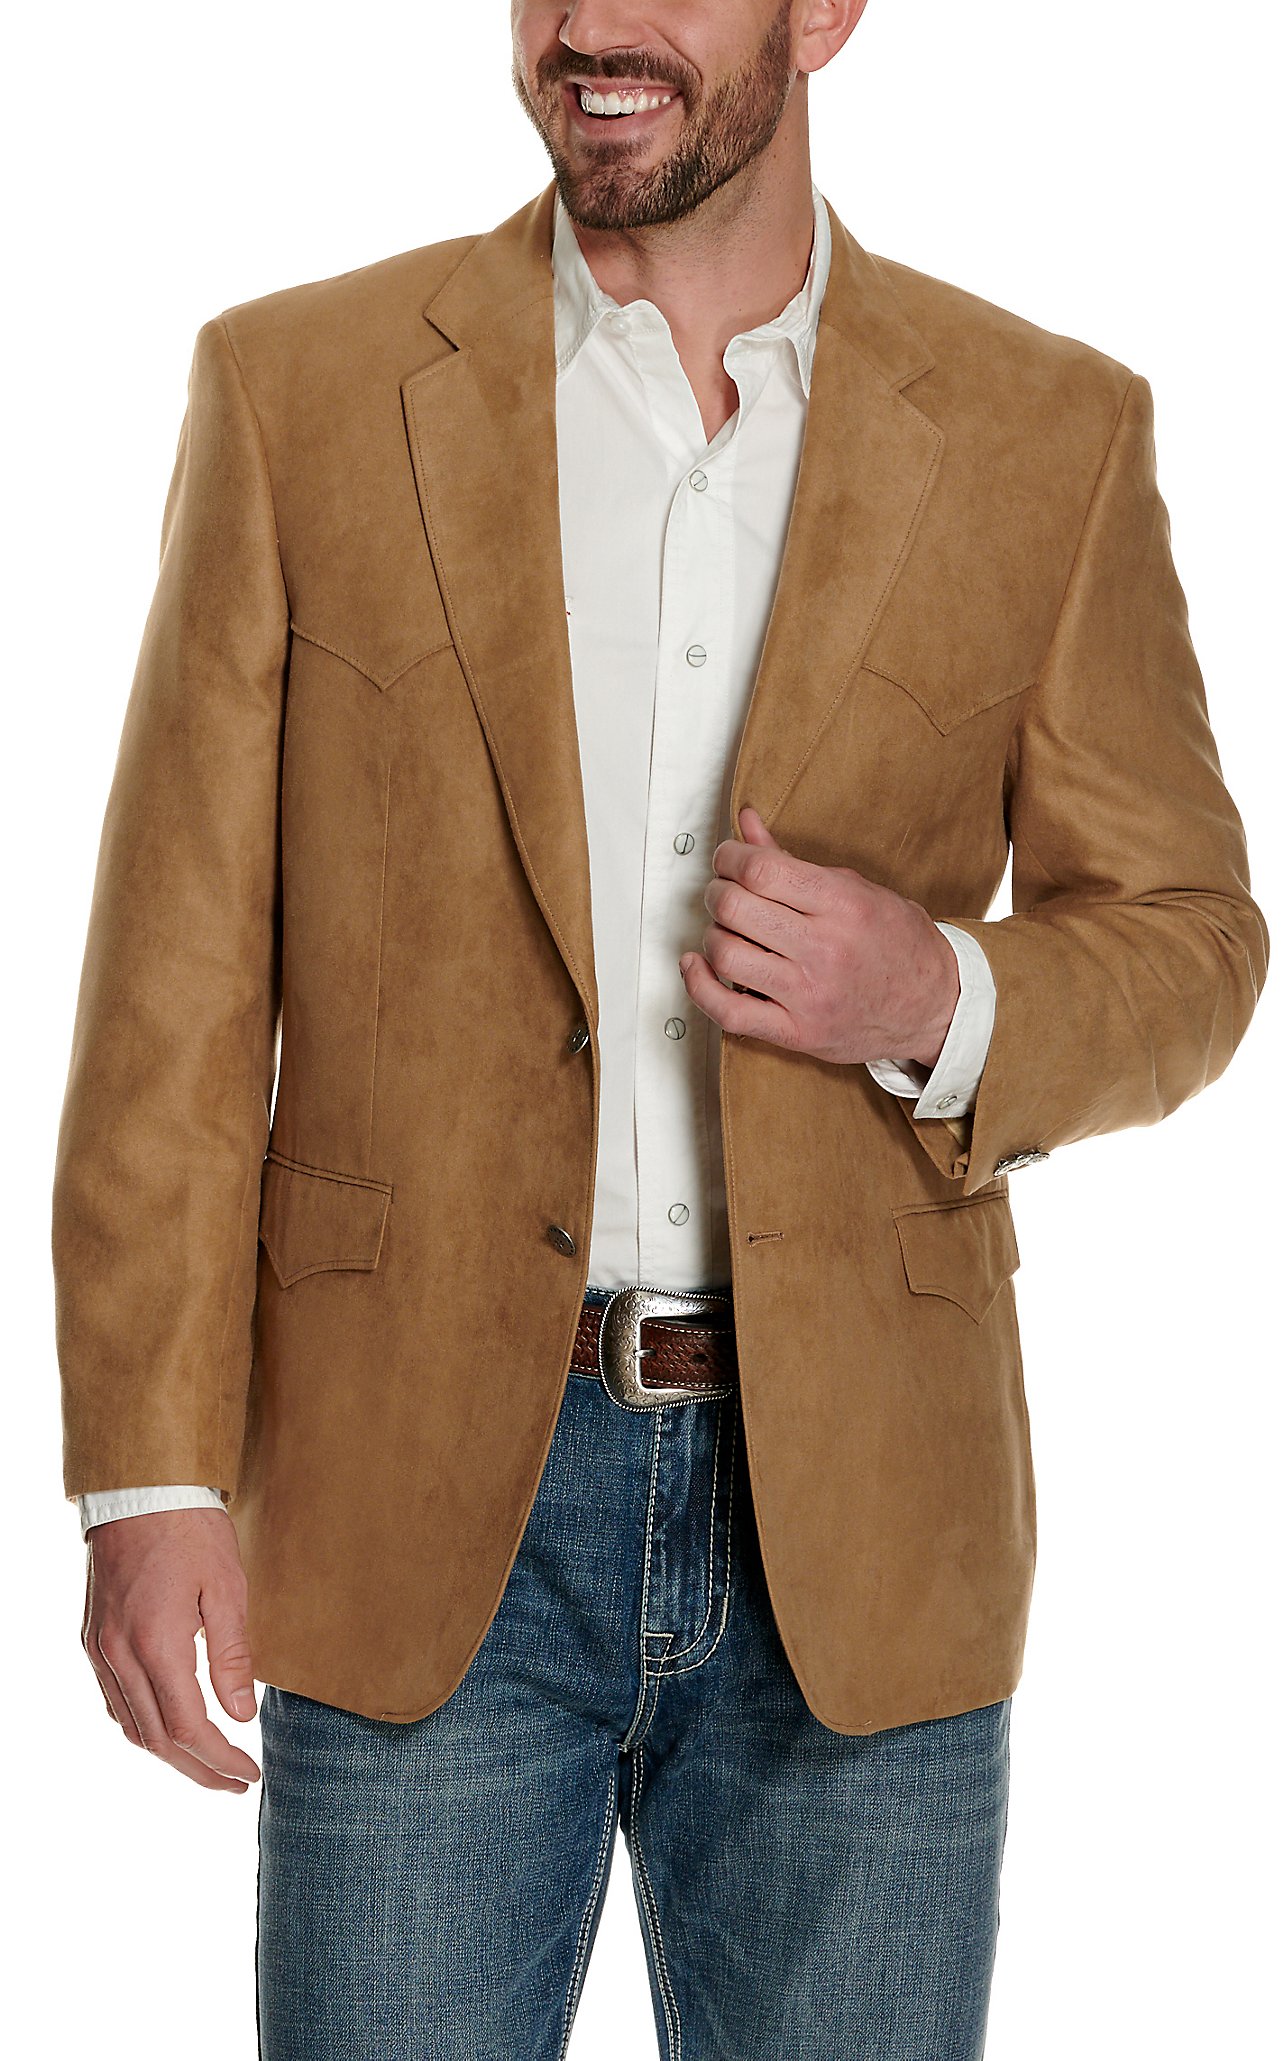 Hot Sale Men's jacket Causal Long Warm Jackets Mens